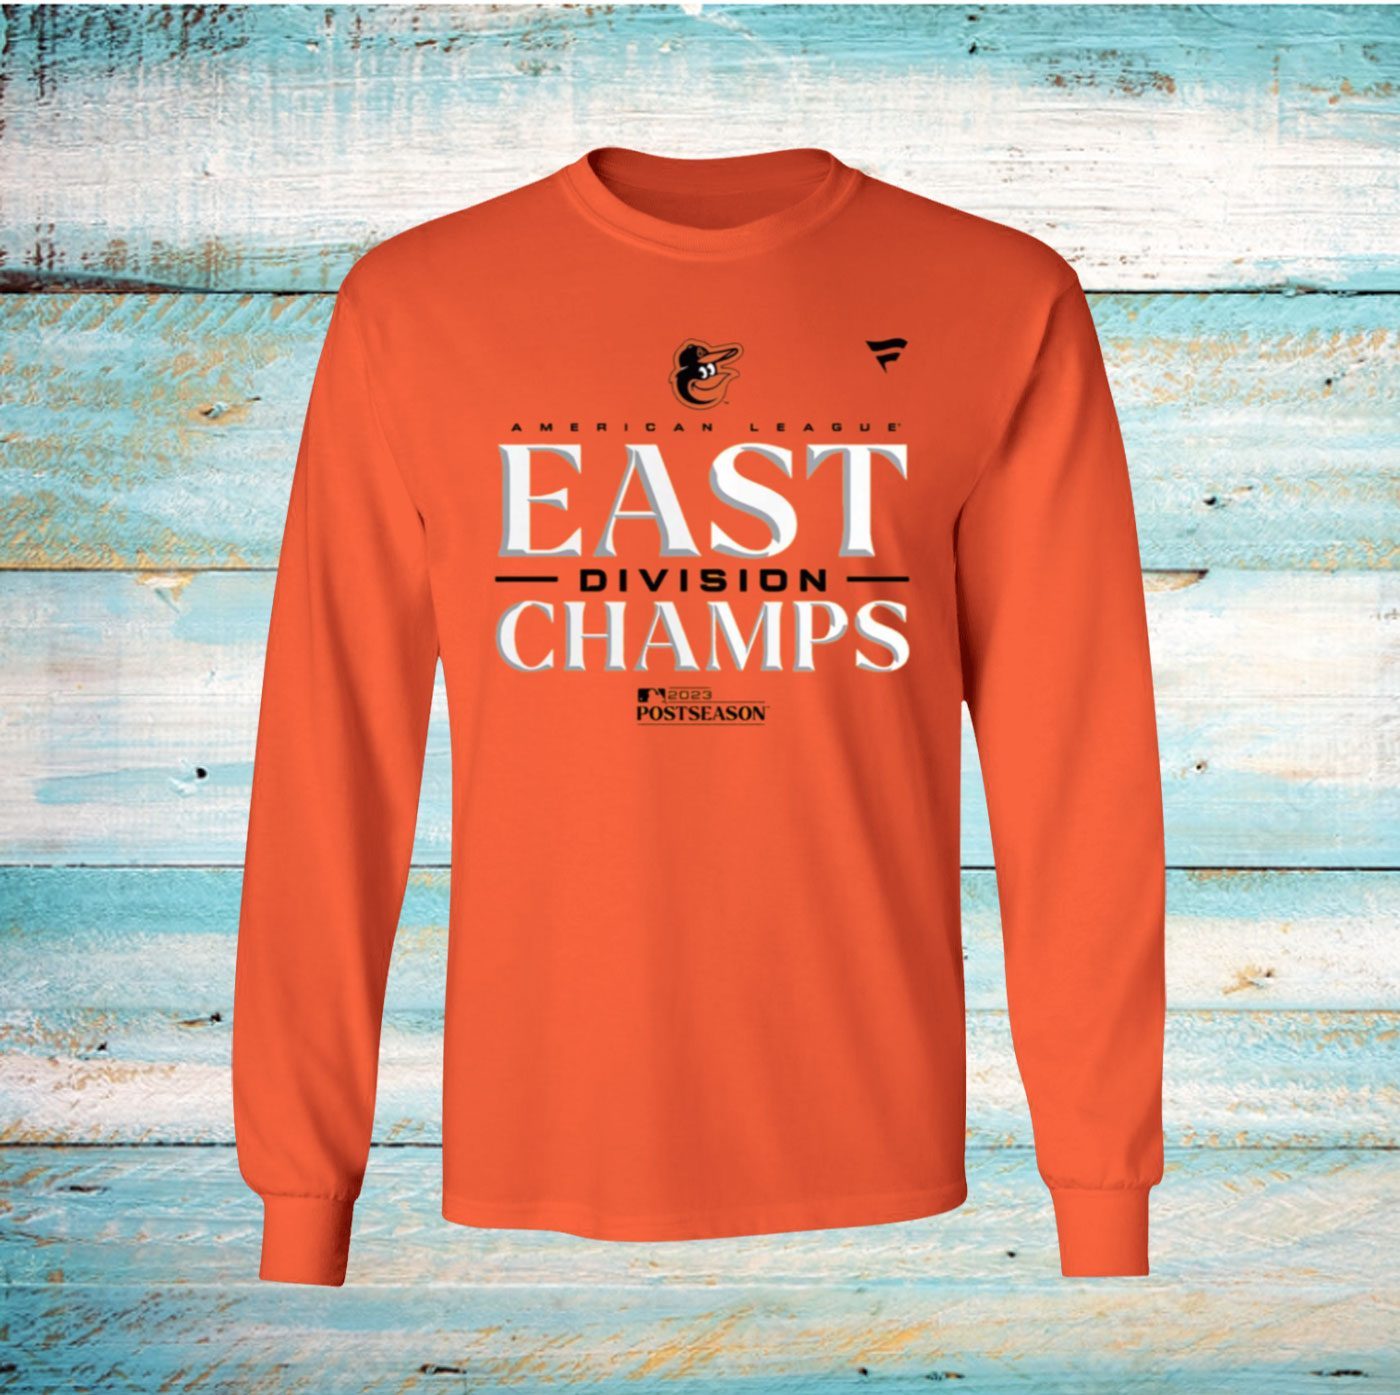 Official orioles al east champions 2023 al east Division champions orioles  2023 champions shirt, hoodie, sweatshirt for men and women